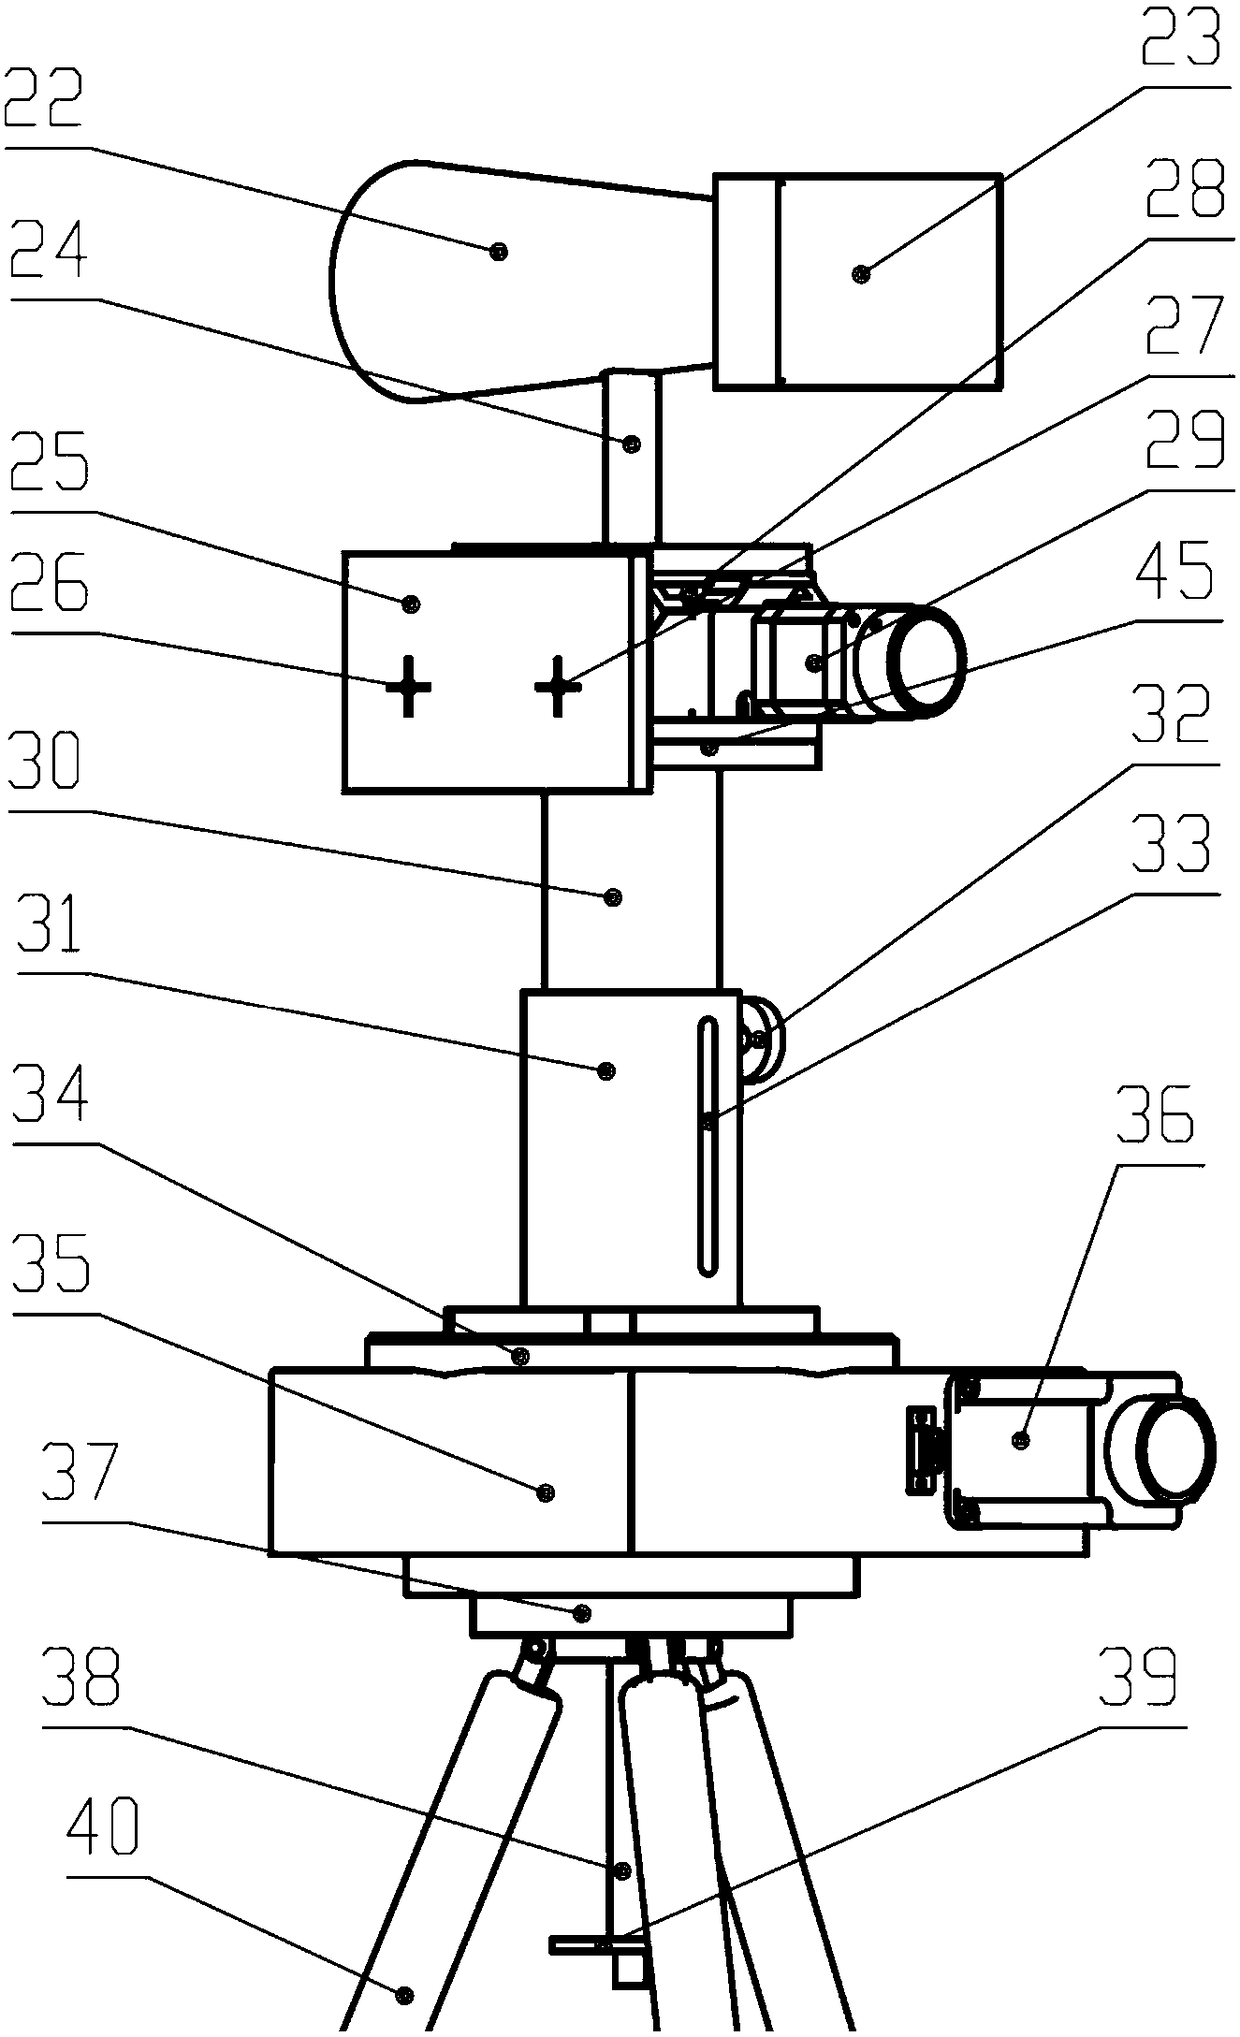 Binocular vision experimental cloud deck with freely adjustable baseline position